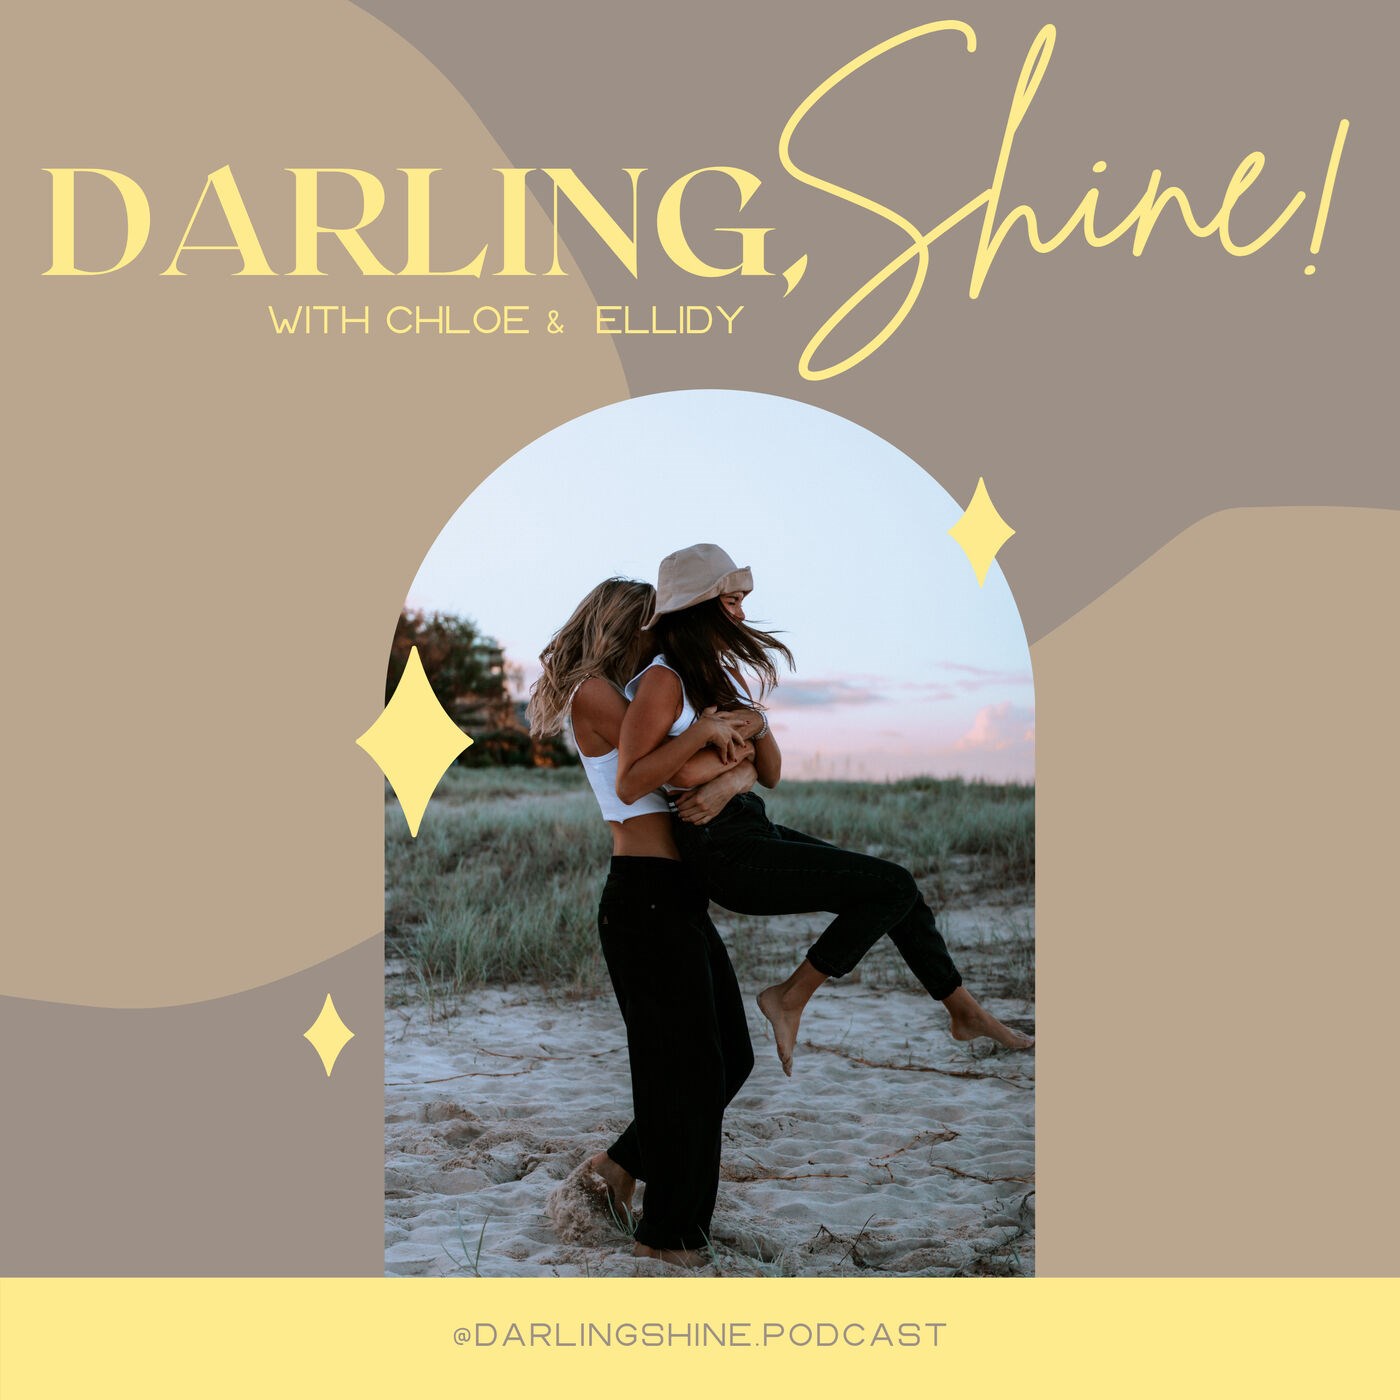 Darling, Shine!